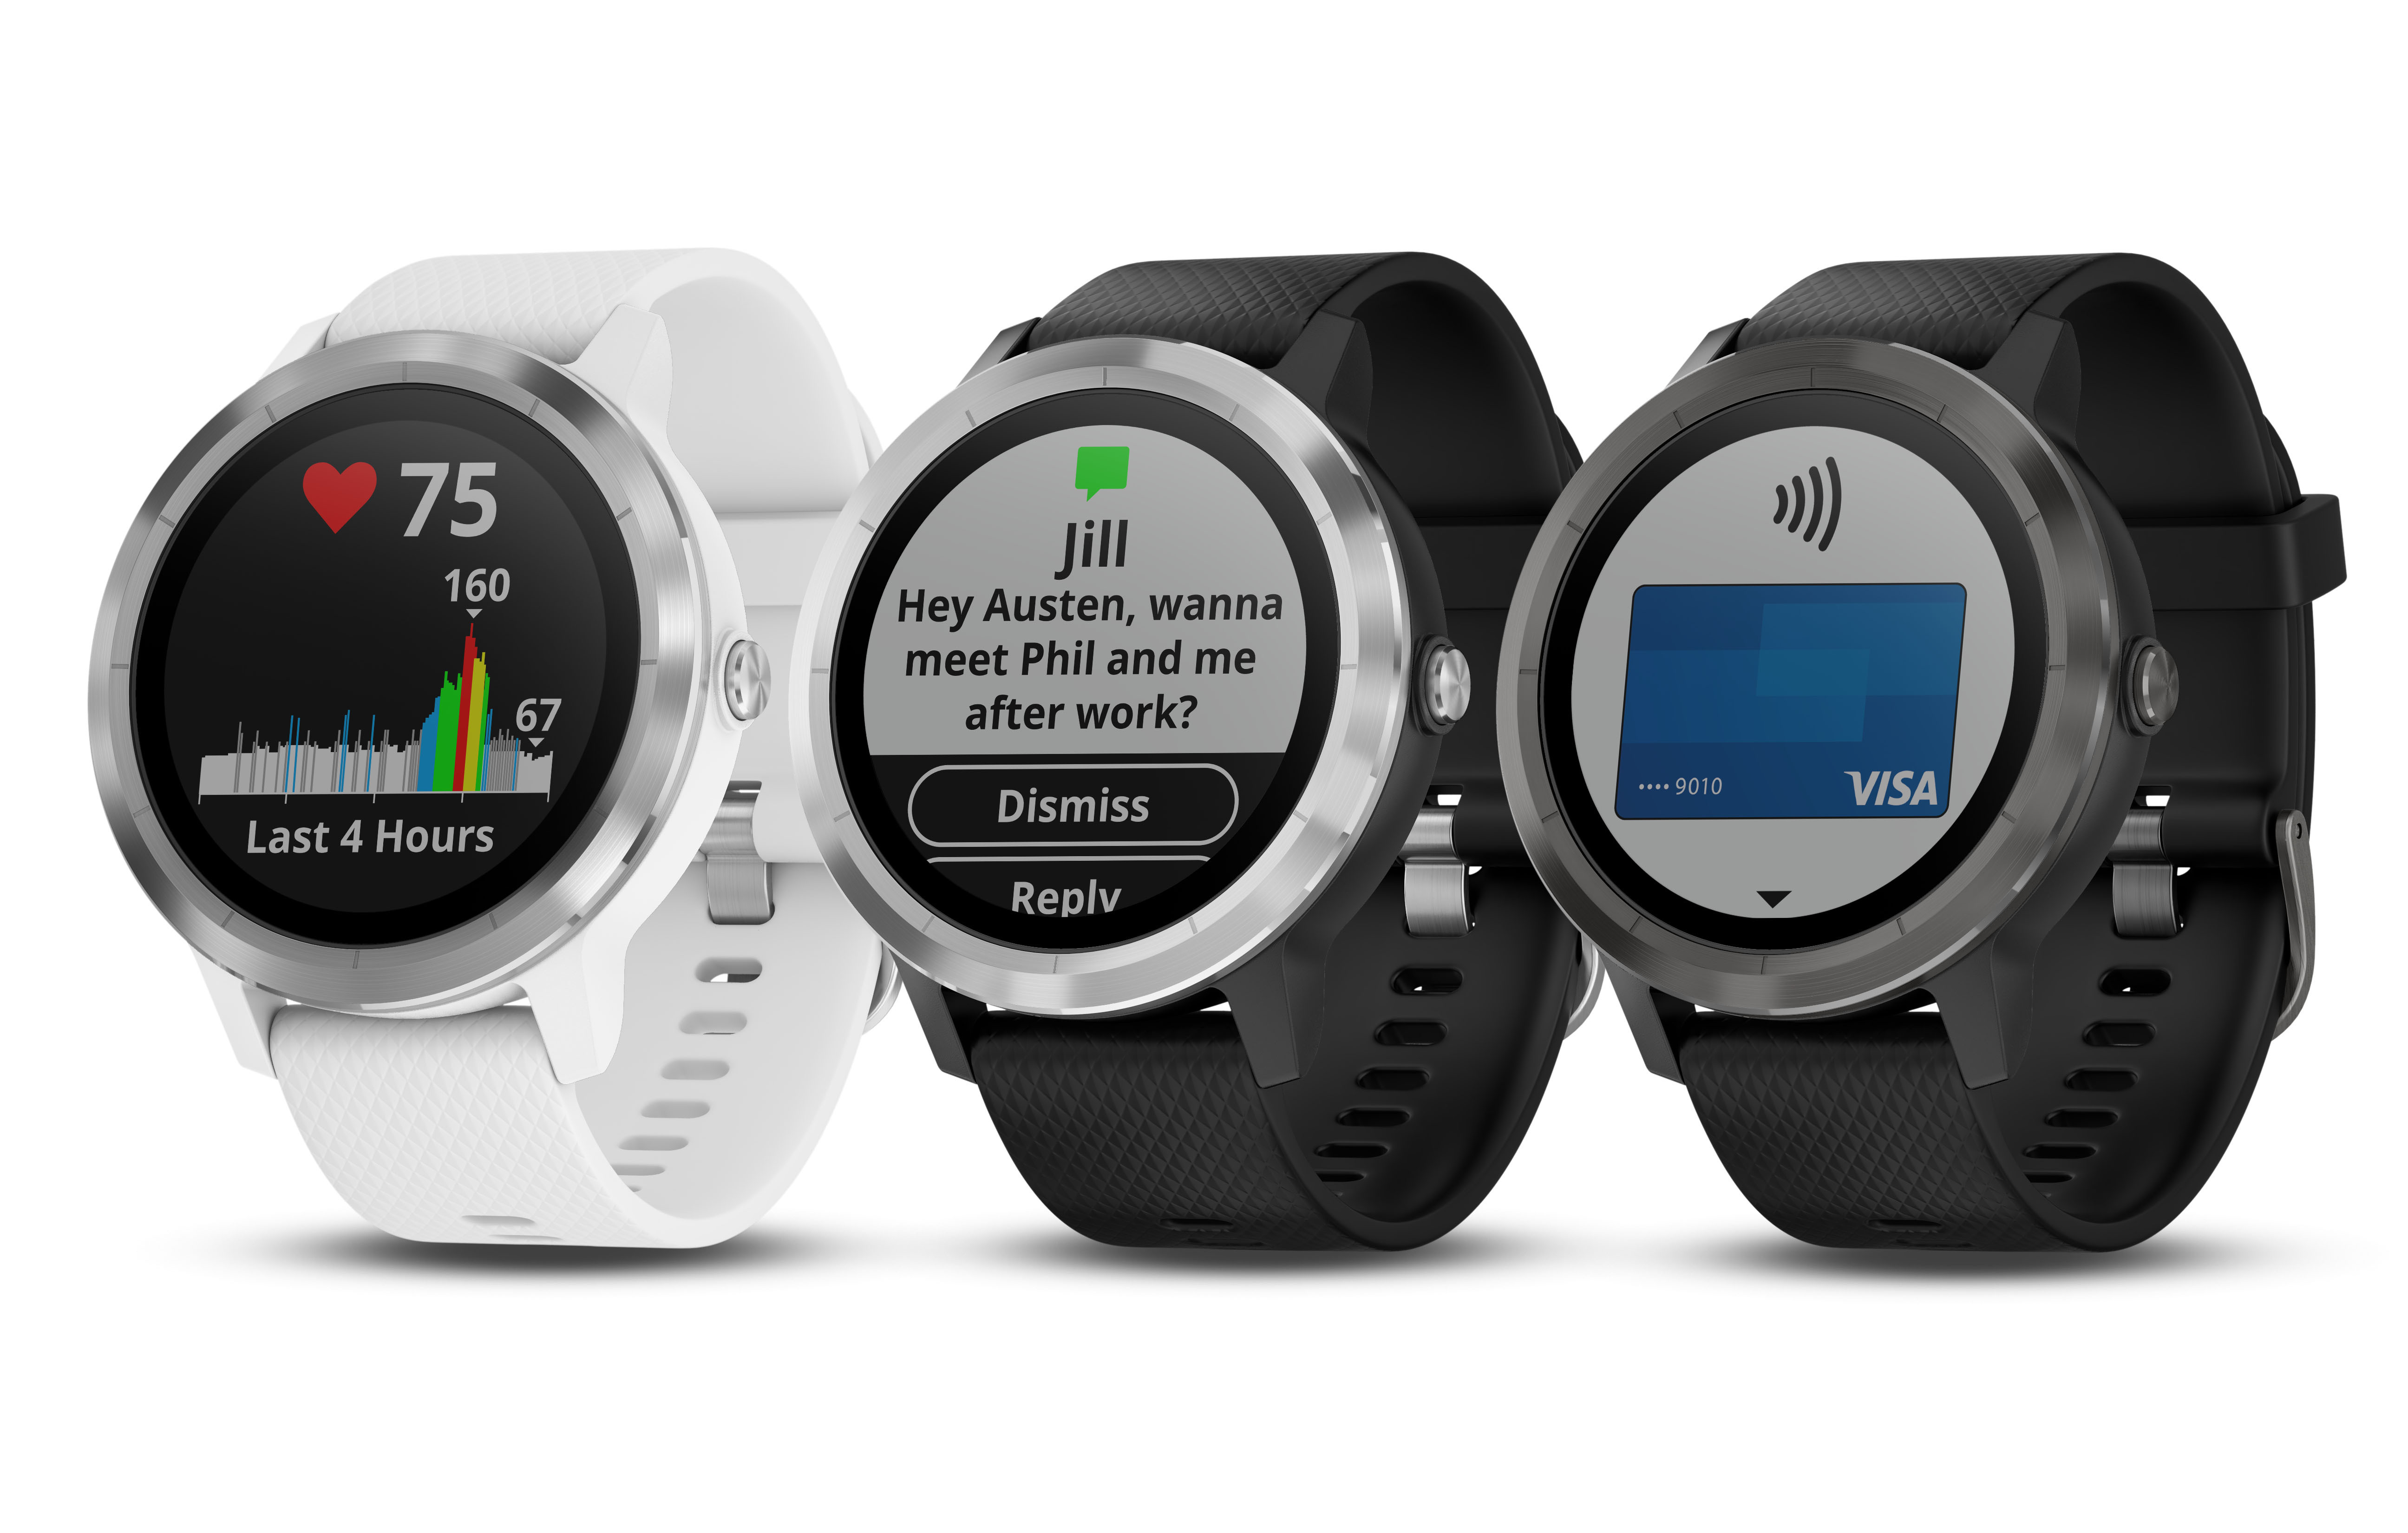 sejle mudder Malawi Garmin introduces vívoactive 3, a stylish smartwatch with new Garmin Pay |  Garmin Blog